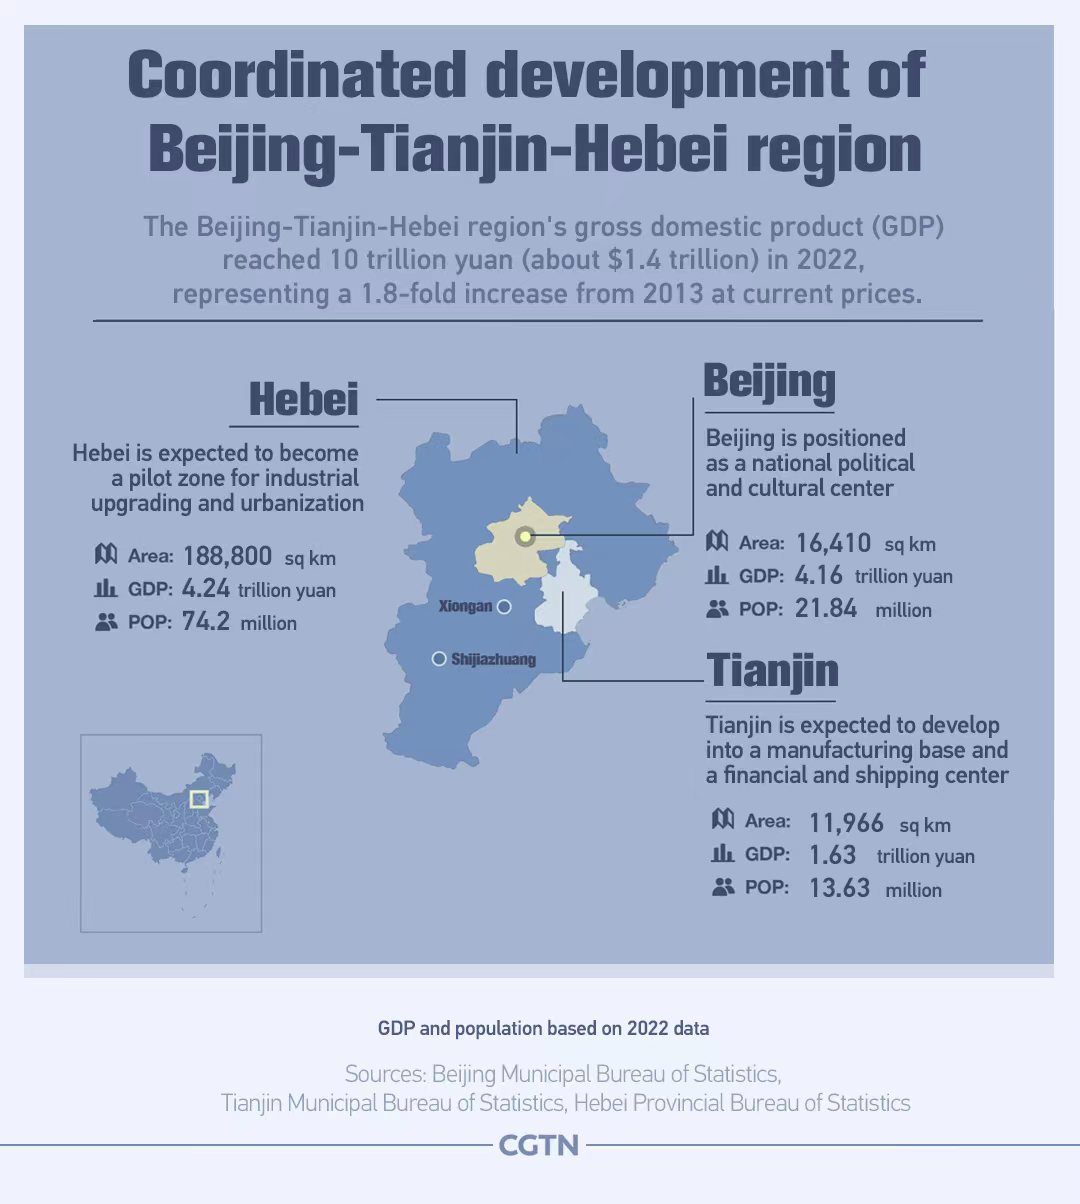 How the Beijing-Tianjin-Hebei region secures coordinated high-quality development